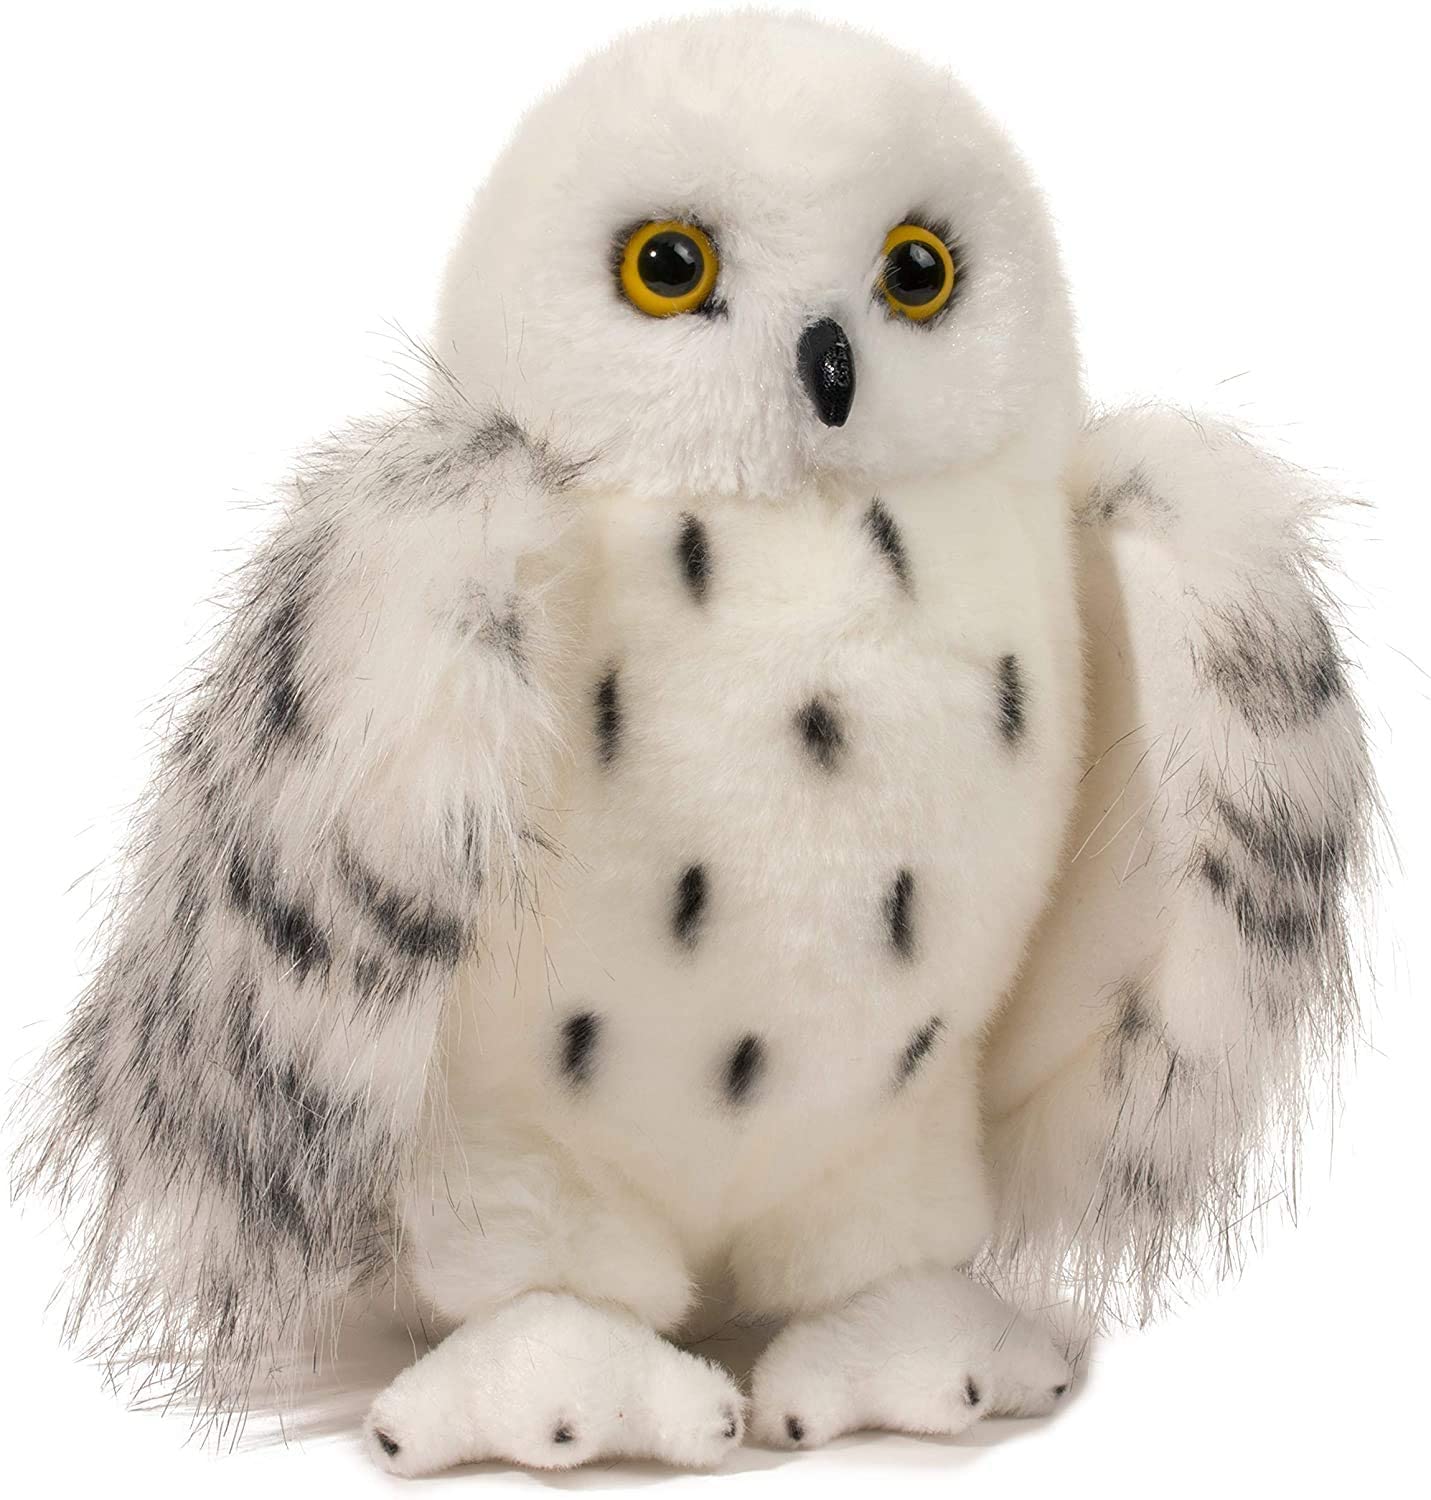 Snowy Owl Stuffed Animal